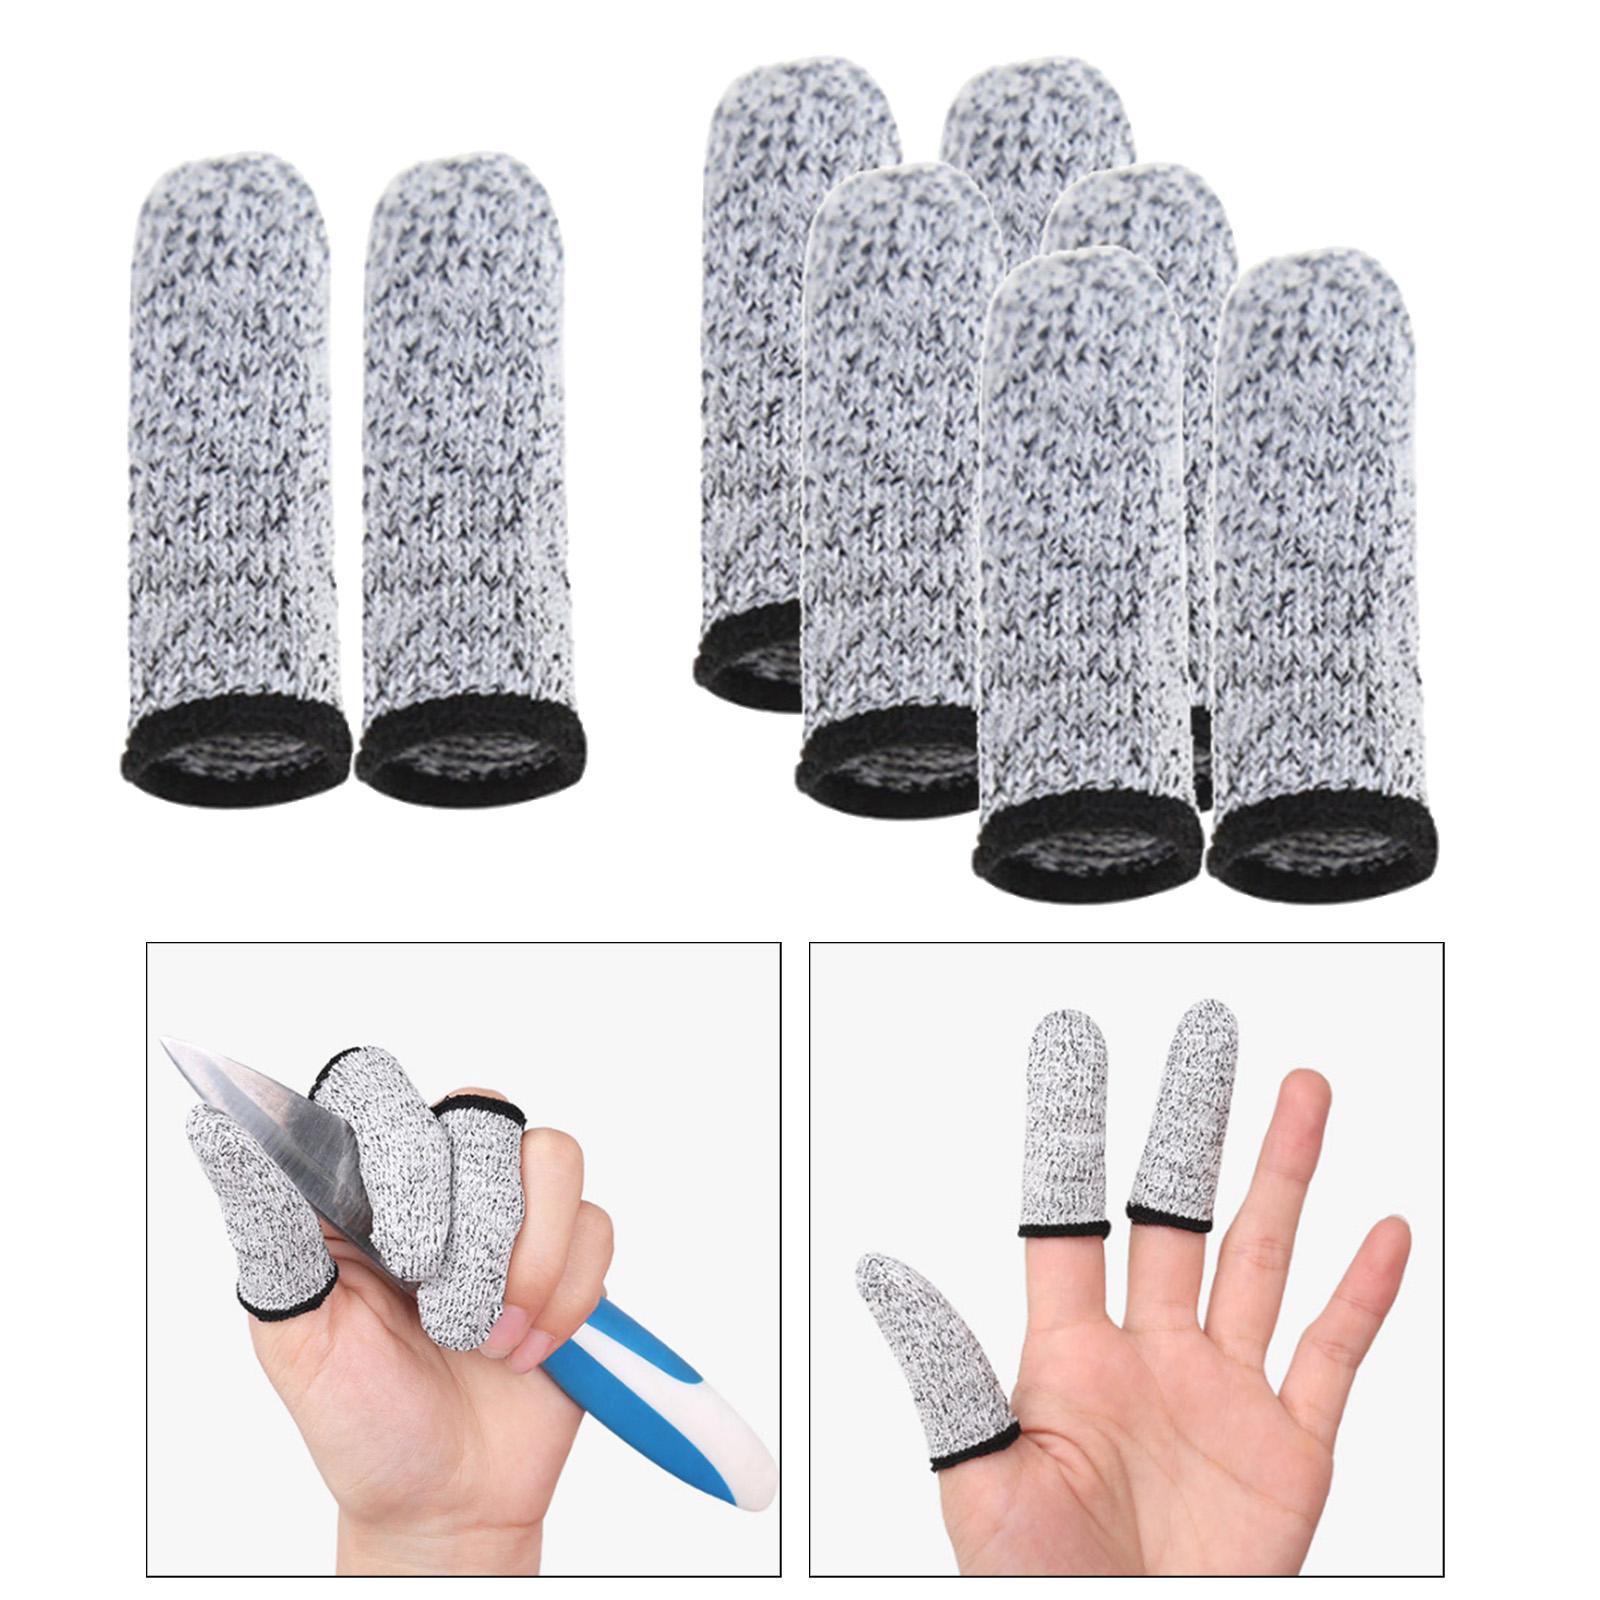 8pcs Reusable Finger Cots Cut Resistant Protection Fingertip Sleeves Caps Covers